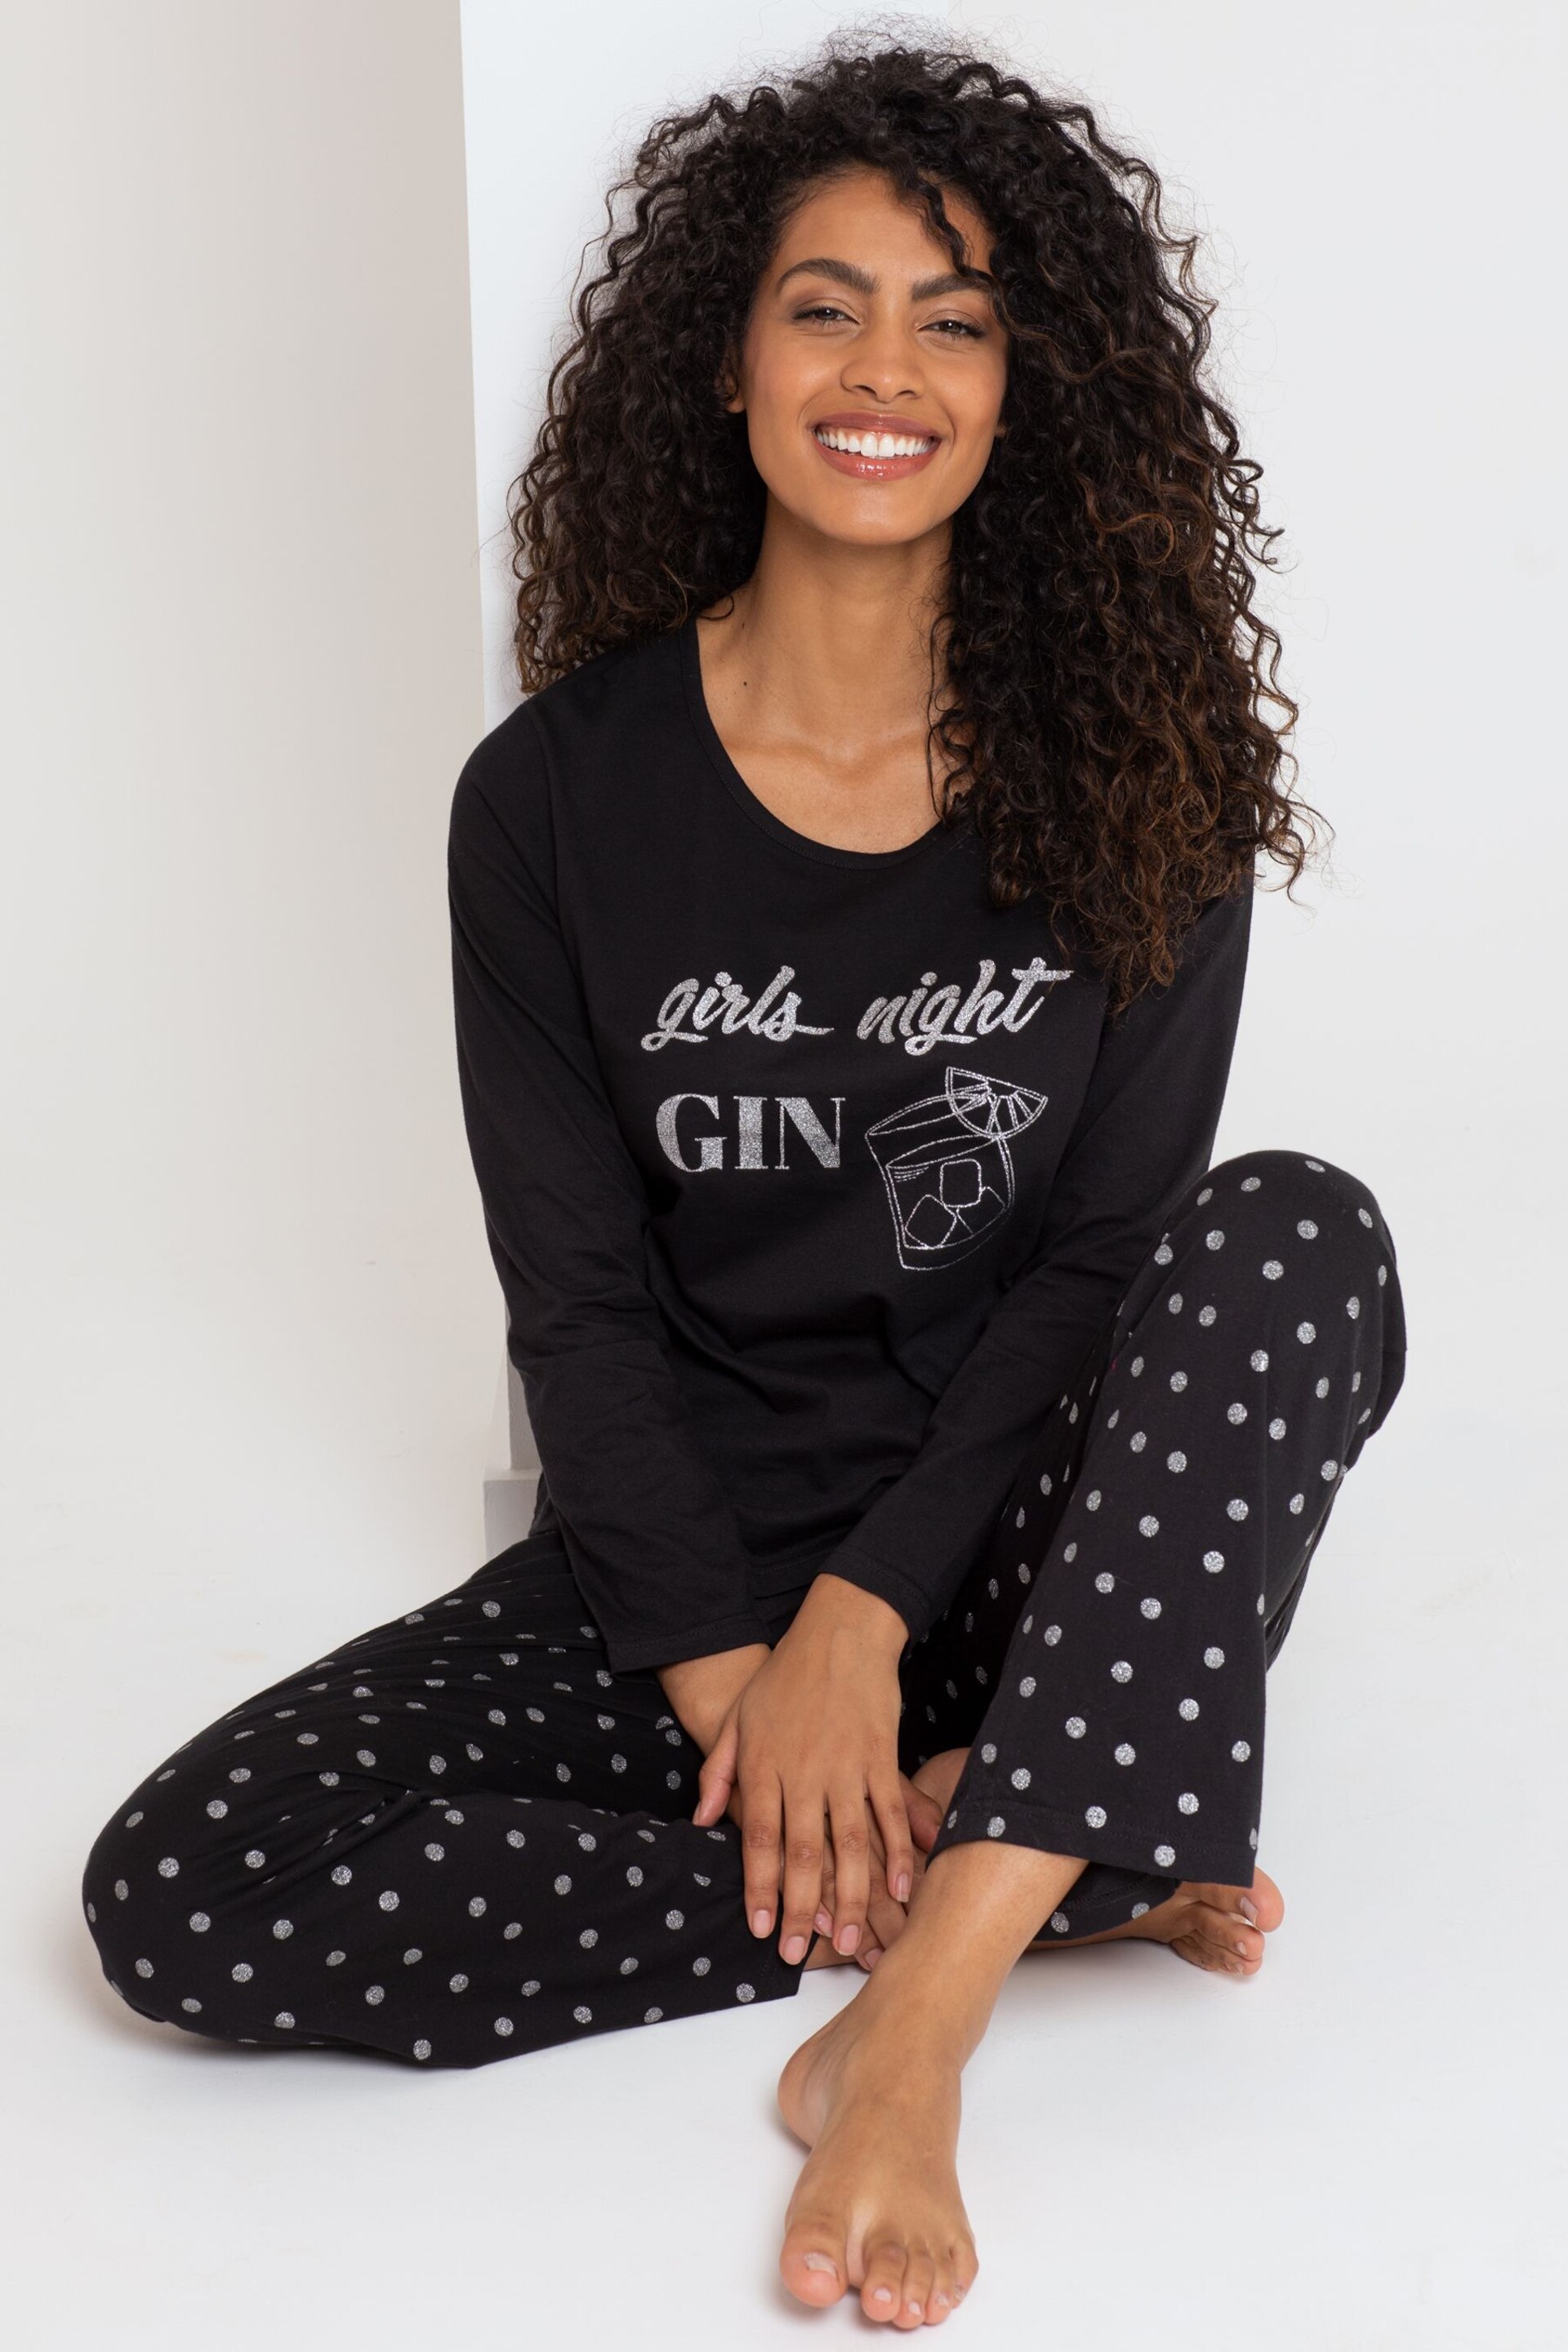 Pour Moi Black Girls Night Gin Cotton Jersey Pyjamas Set - Image 4 of 8